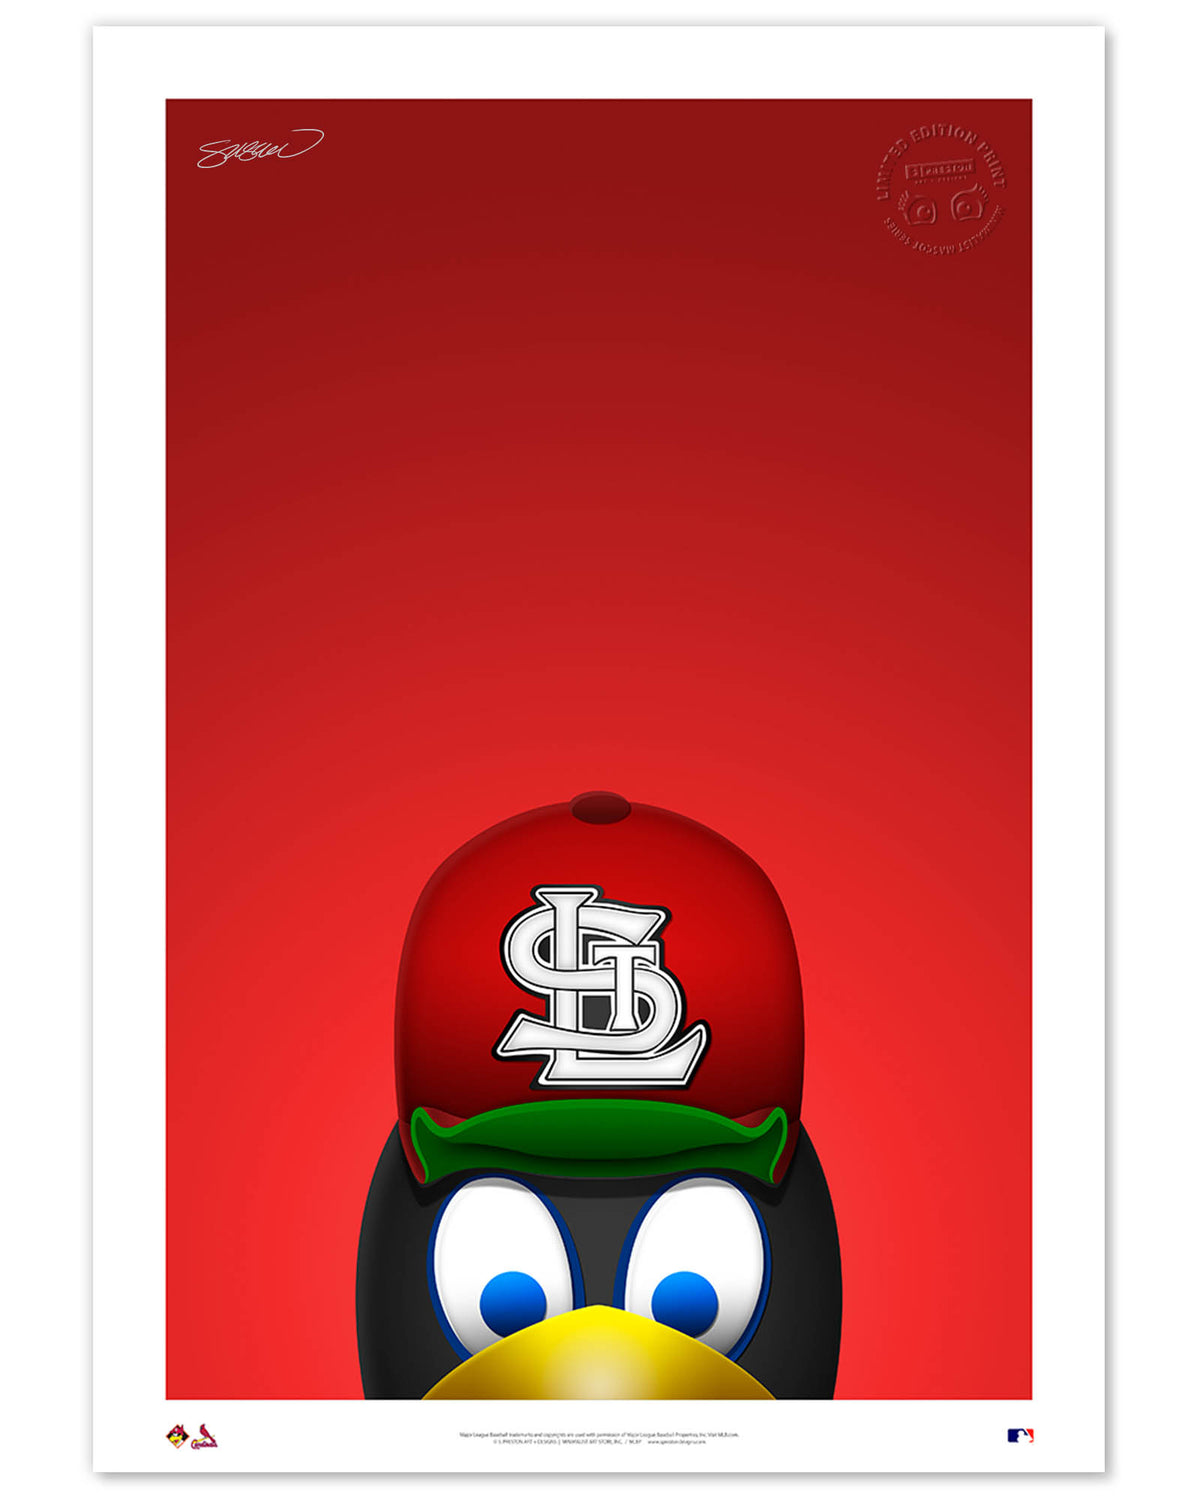 Vintage St Louis Cardinals MLB Baseball Jersey Size M -  Denmark